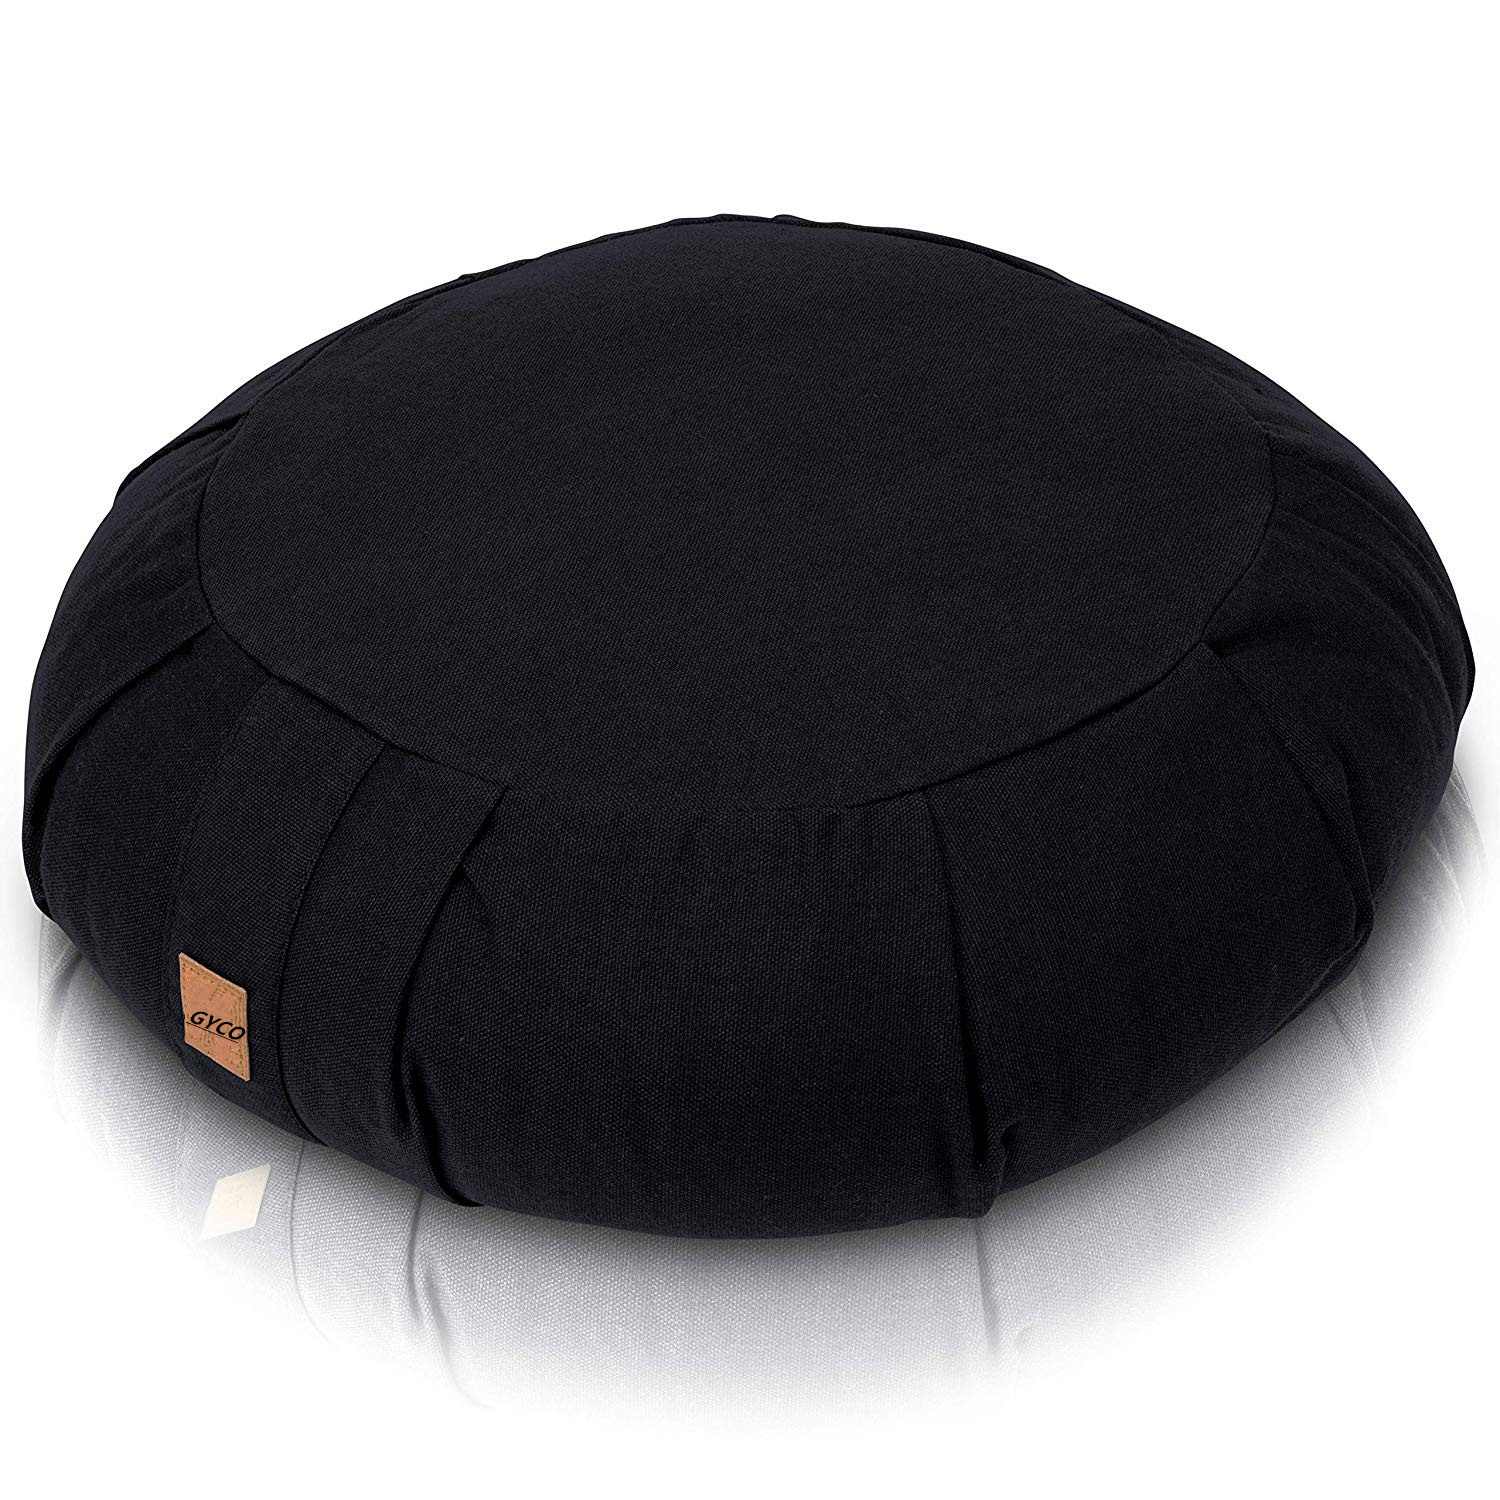 Buckwheat Meditation Cushion Round Zafu Yoga Pillow